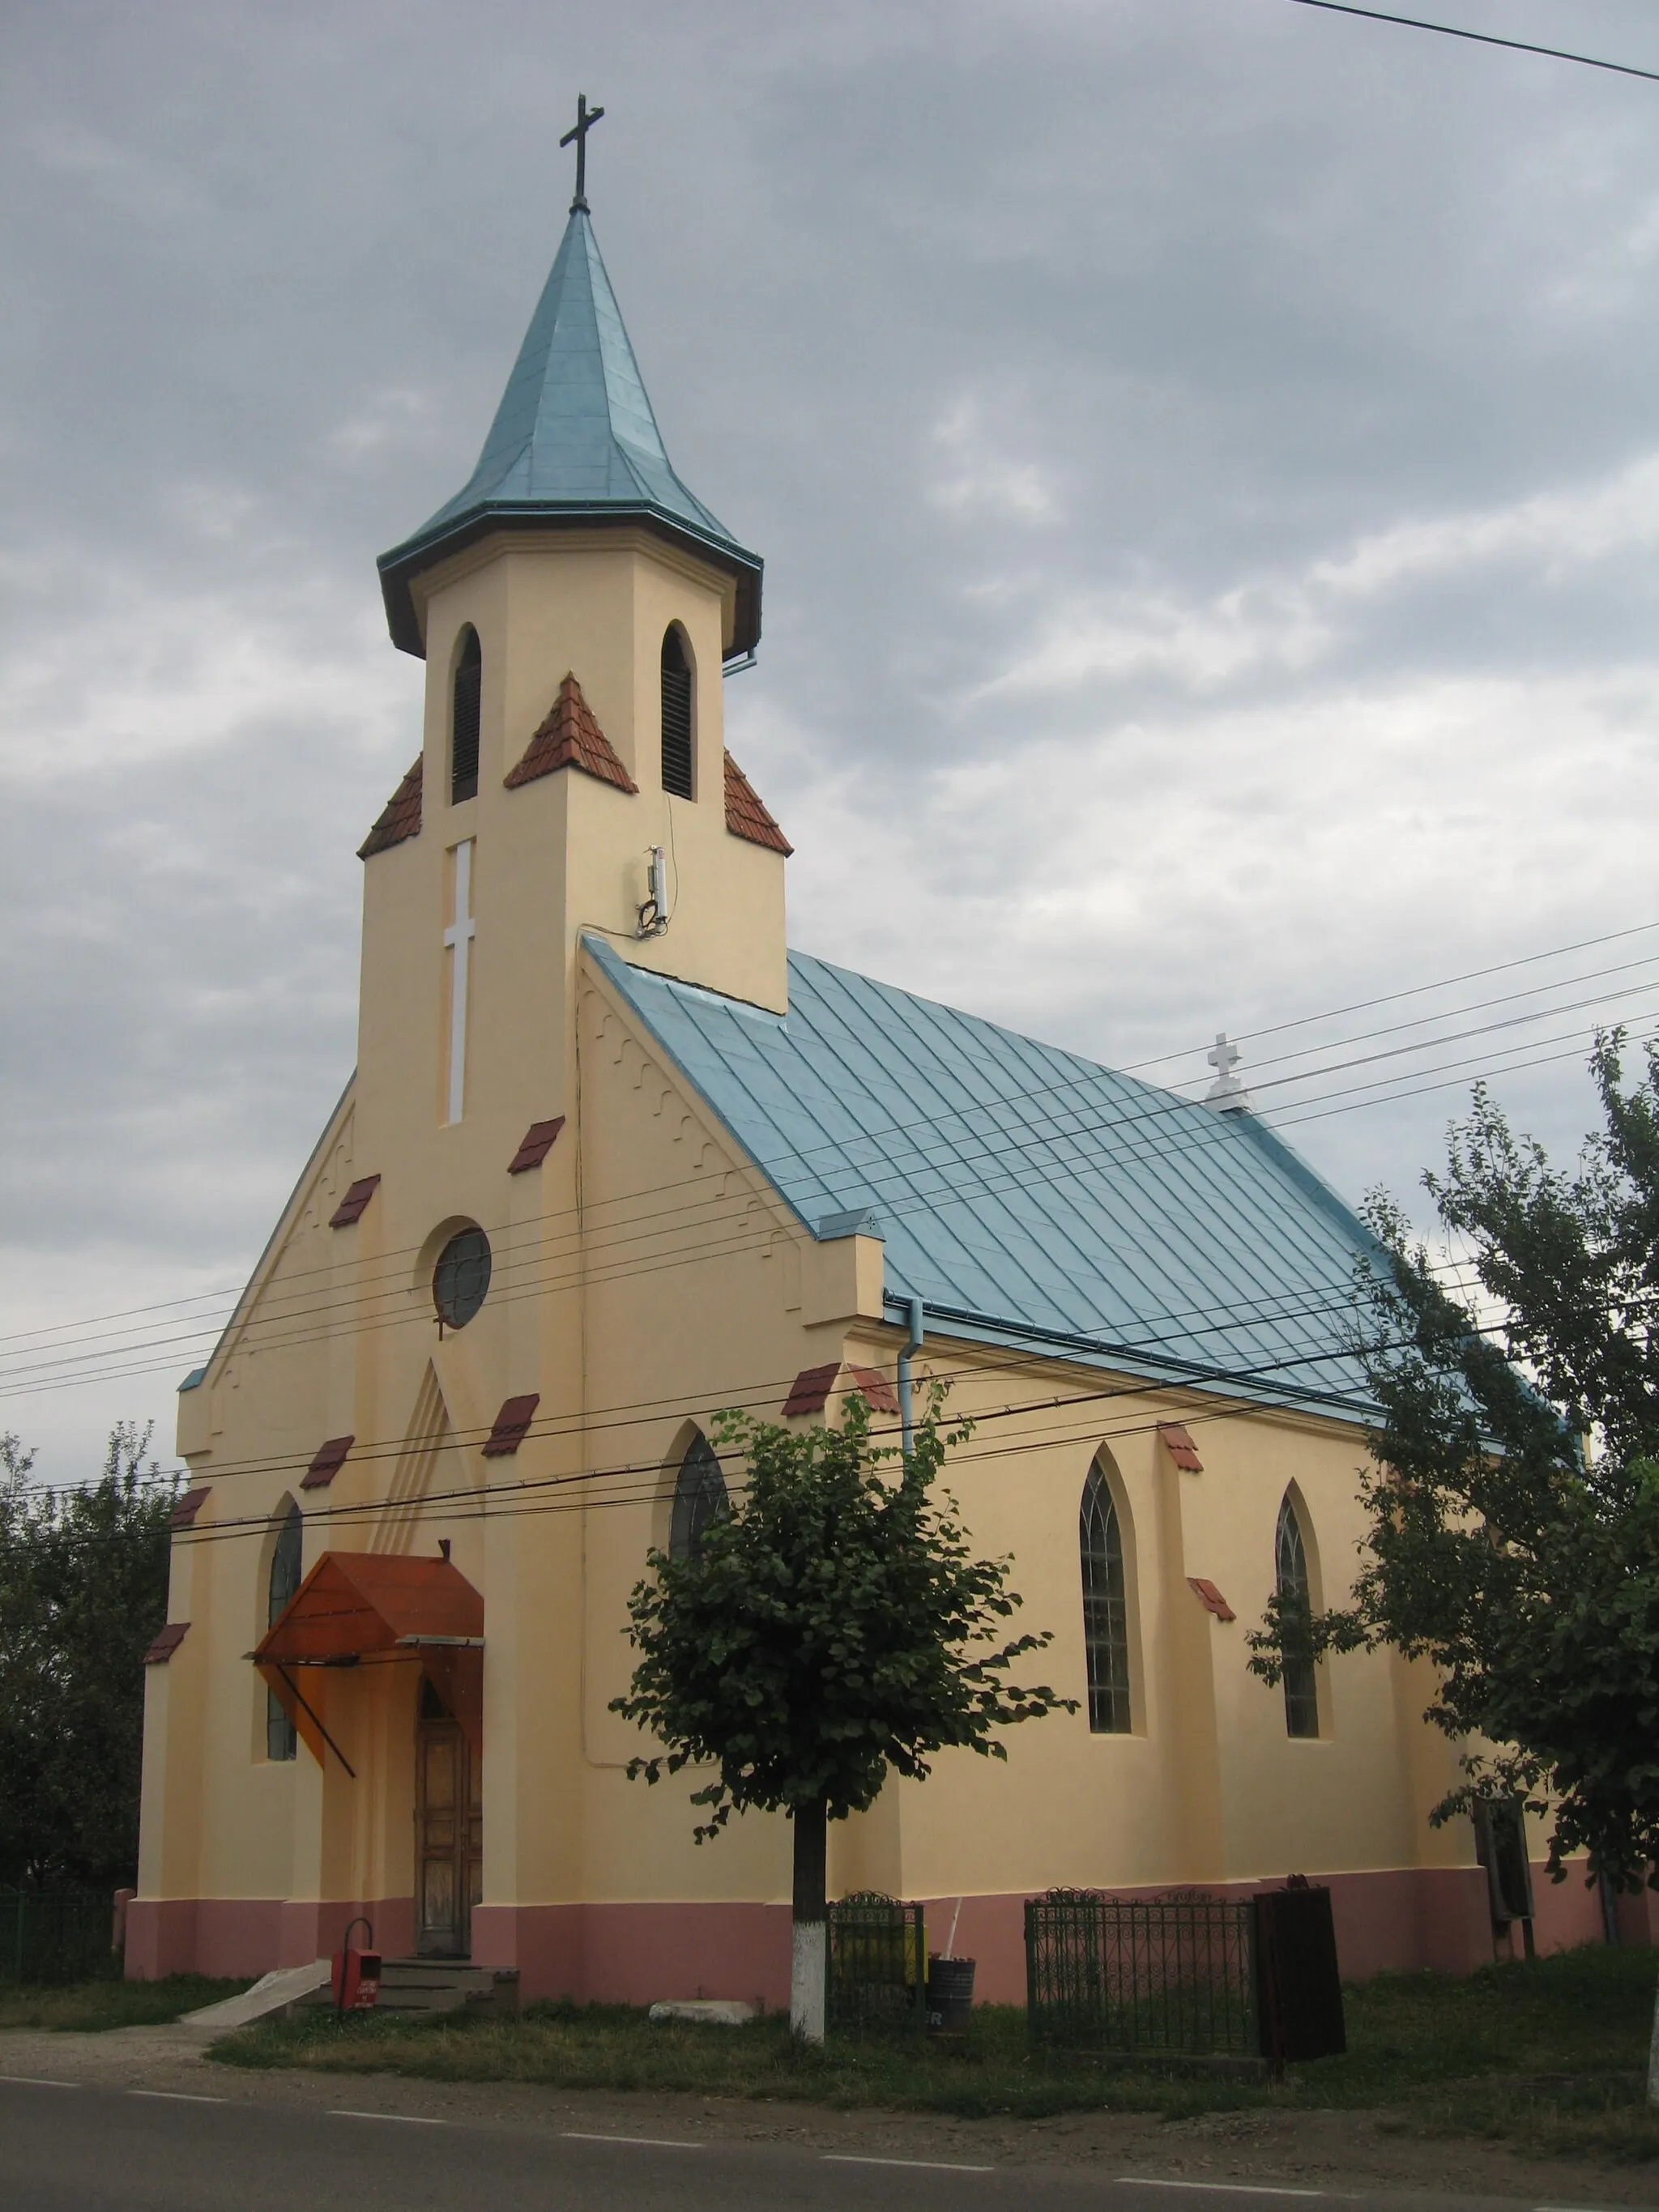 Photo showing: Biserica Sf. Petru si Pavel din Badeuti, Suceava County, Romania, fosta biserică evanghelică